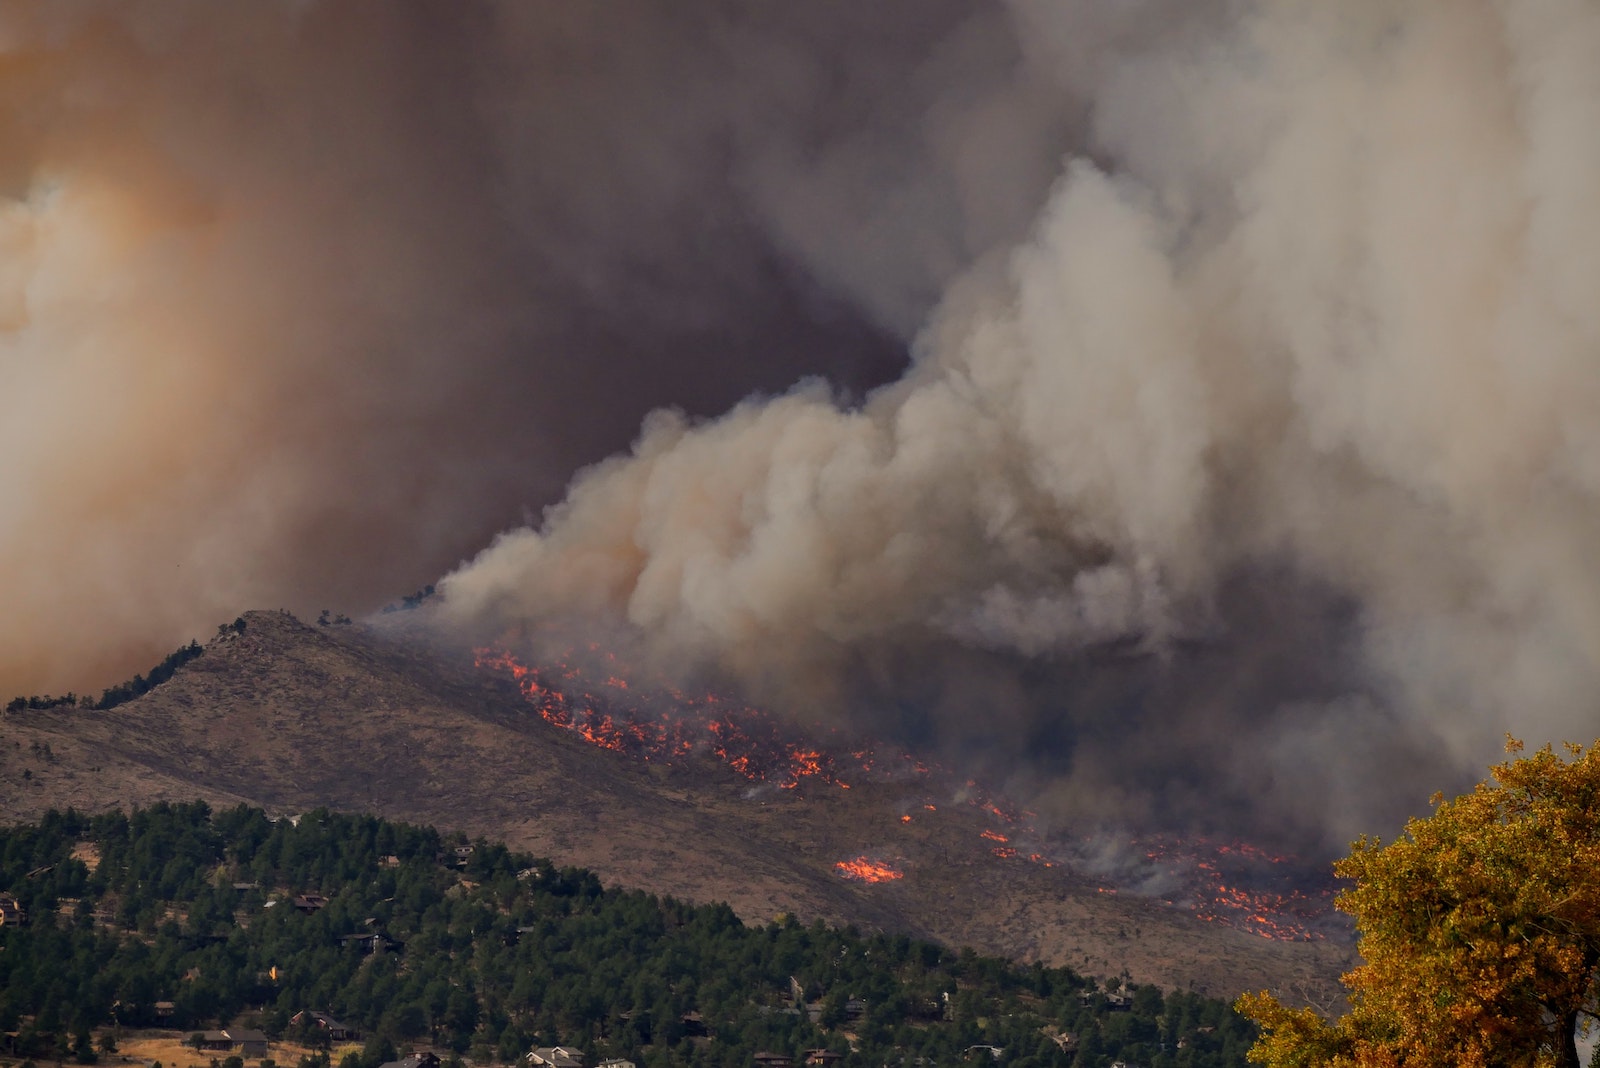 smoke pluming off a wildfire burning a hillside